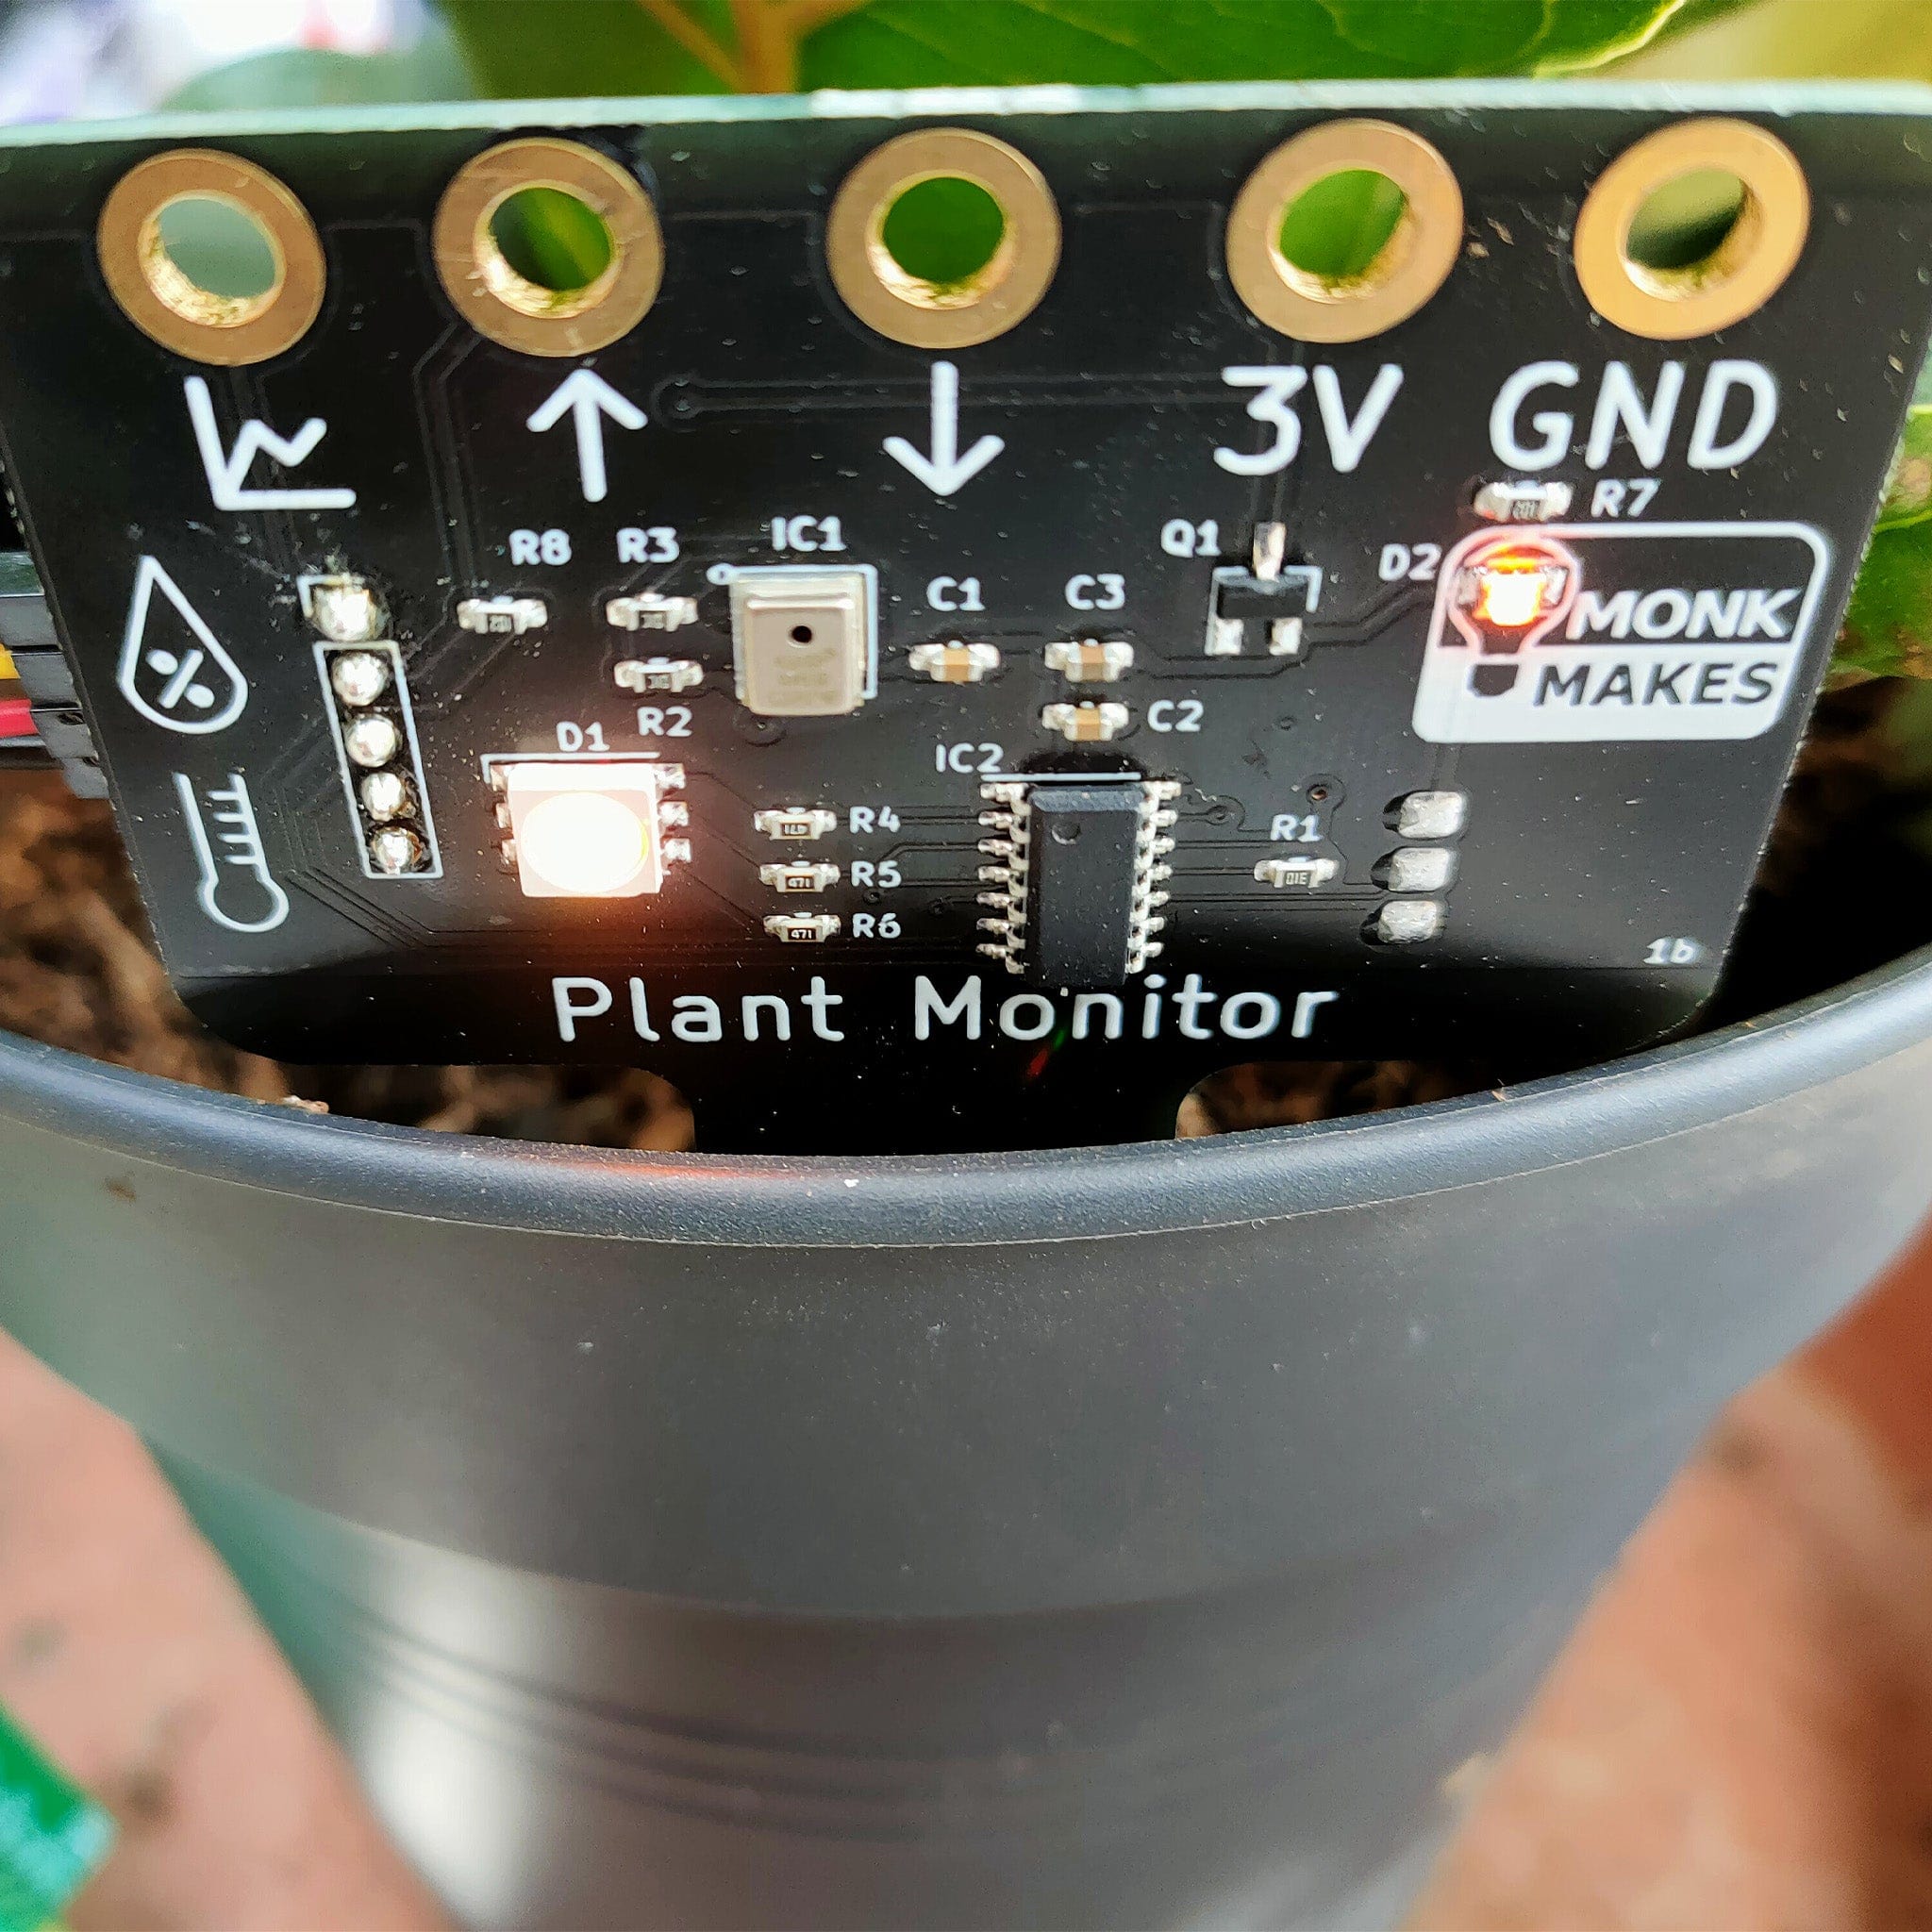 Monk Makes Plant Monitor - The Pi Hut